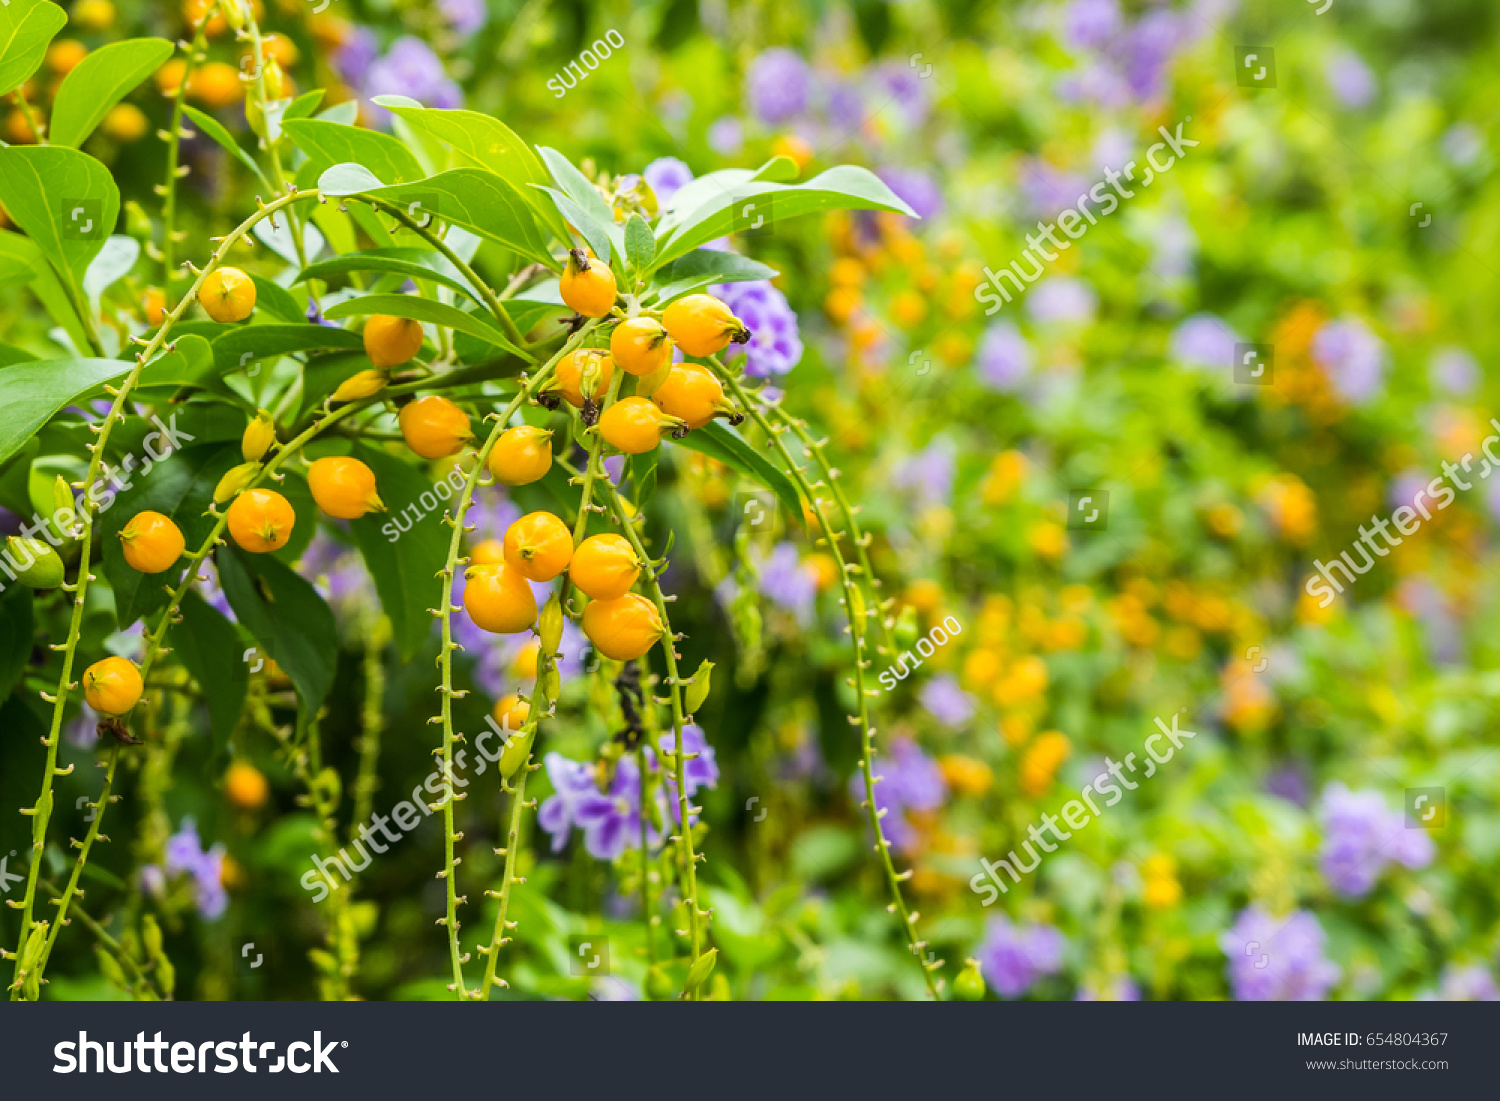 Duranta Erecta Orange Berries Purple Flower Nature Stock Image 654804367,Keeping Up With The Joneses Full Movie